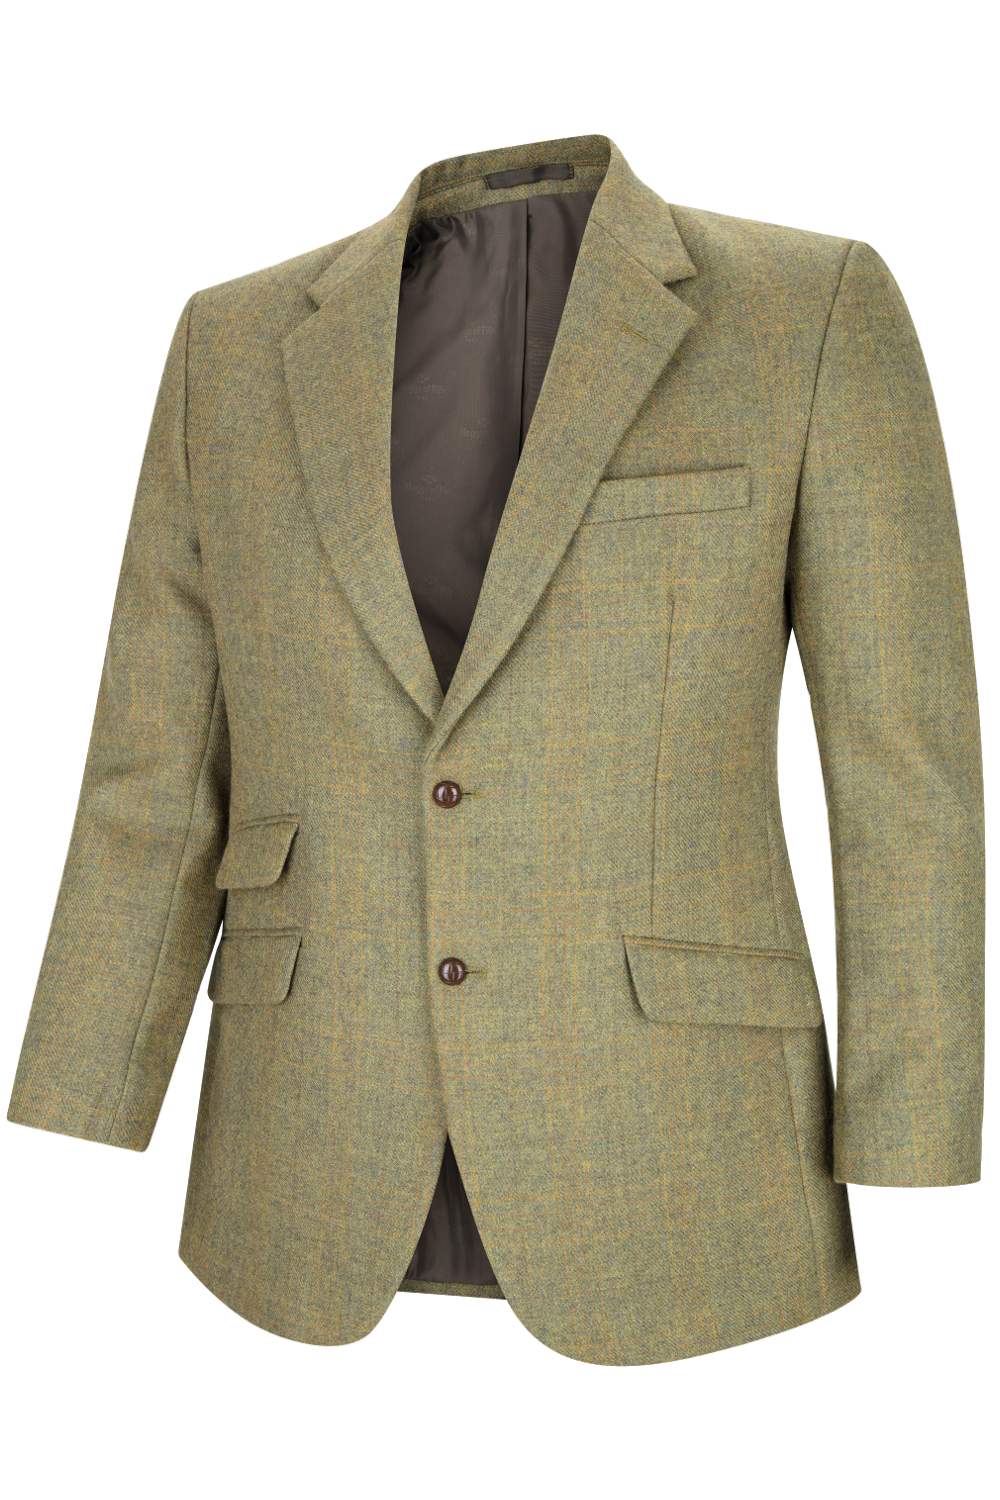 Men's Tweed Jackets, Waistcoats and Blazers